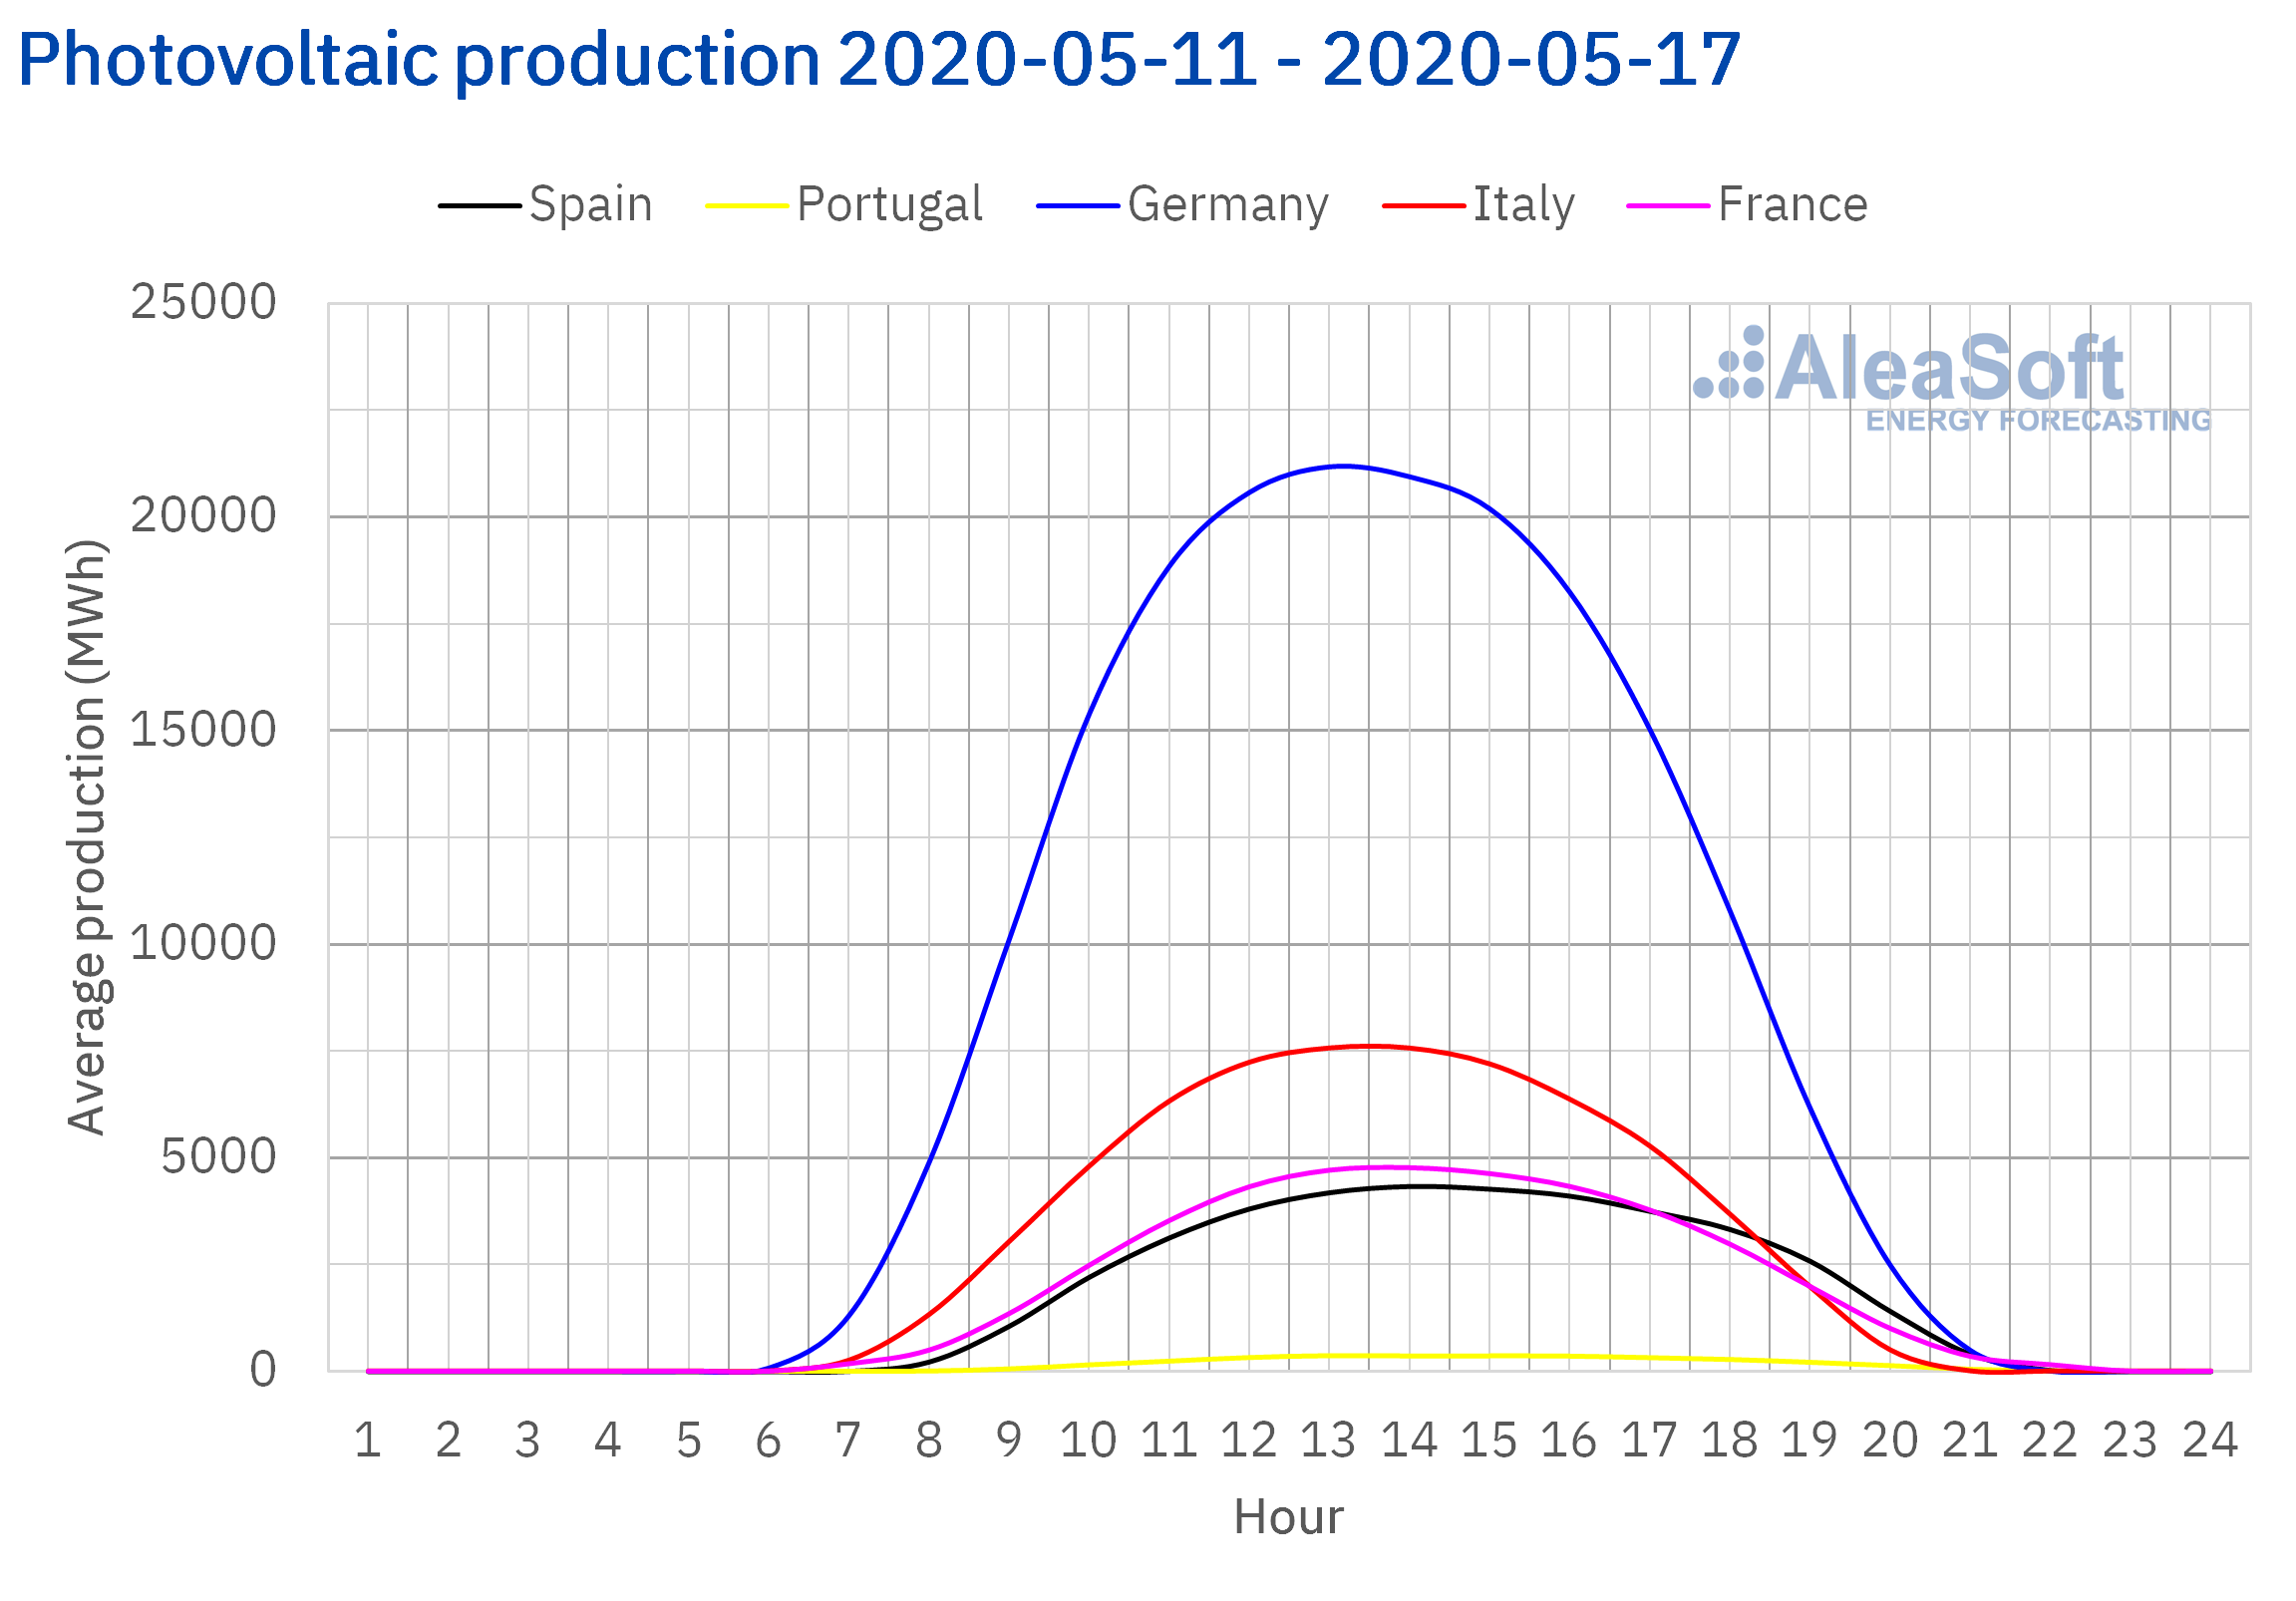 leasoft.c- om/wp content/uploads/2020/05/20200518 AleaSoft Solar photovoltaic production profile Europe.png